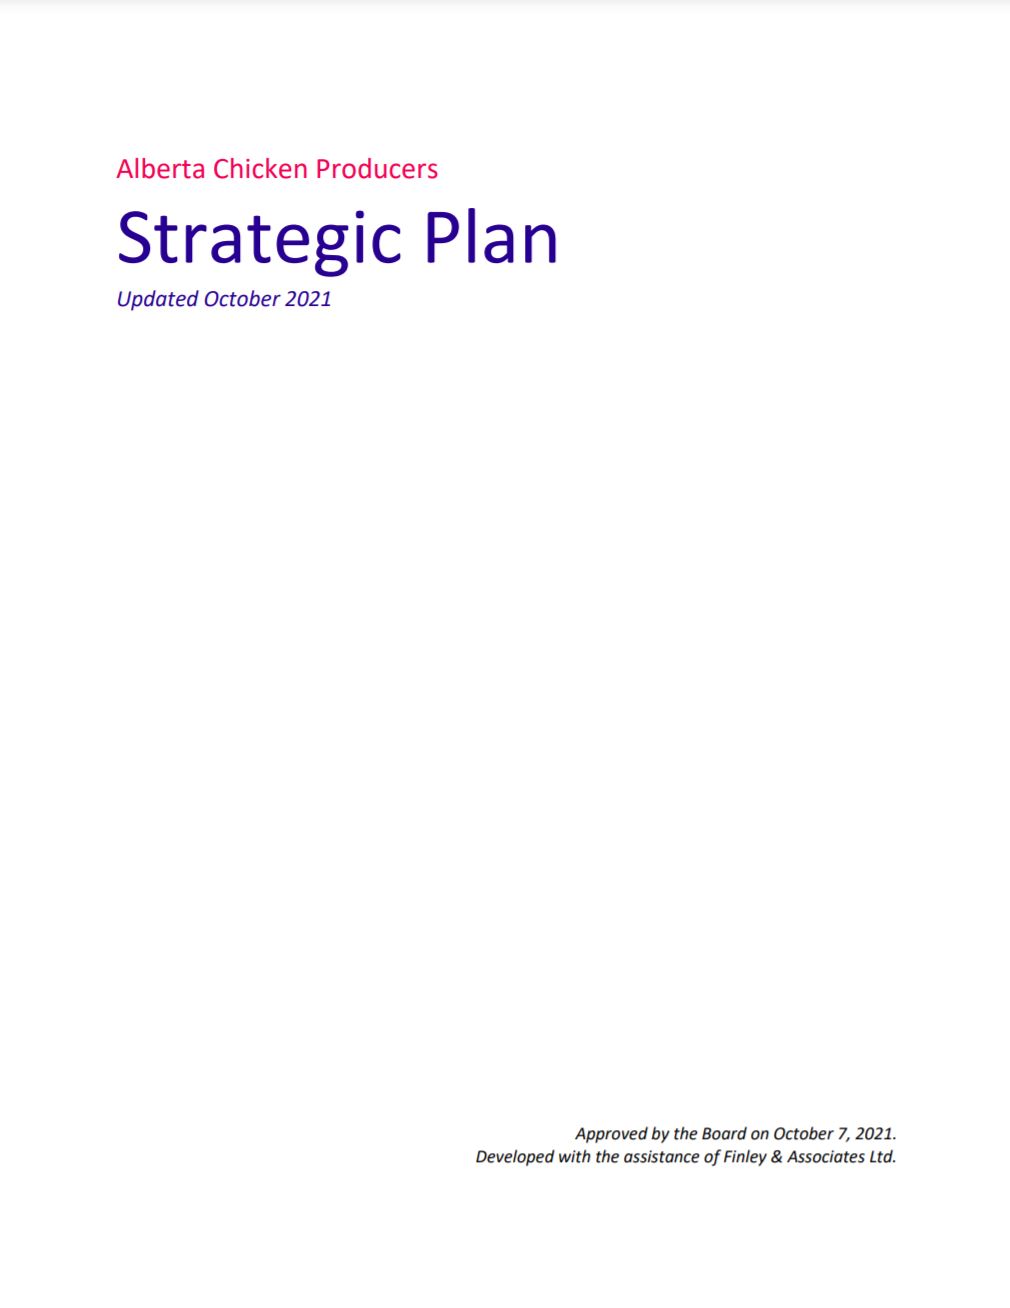 strategic plan1